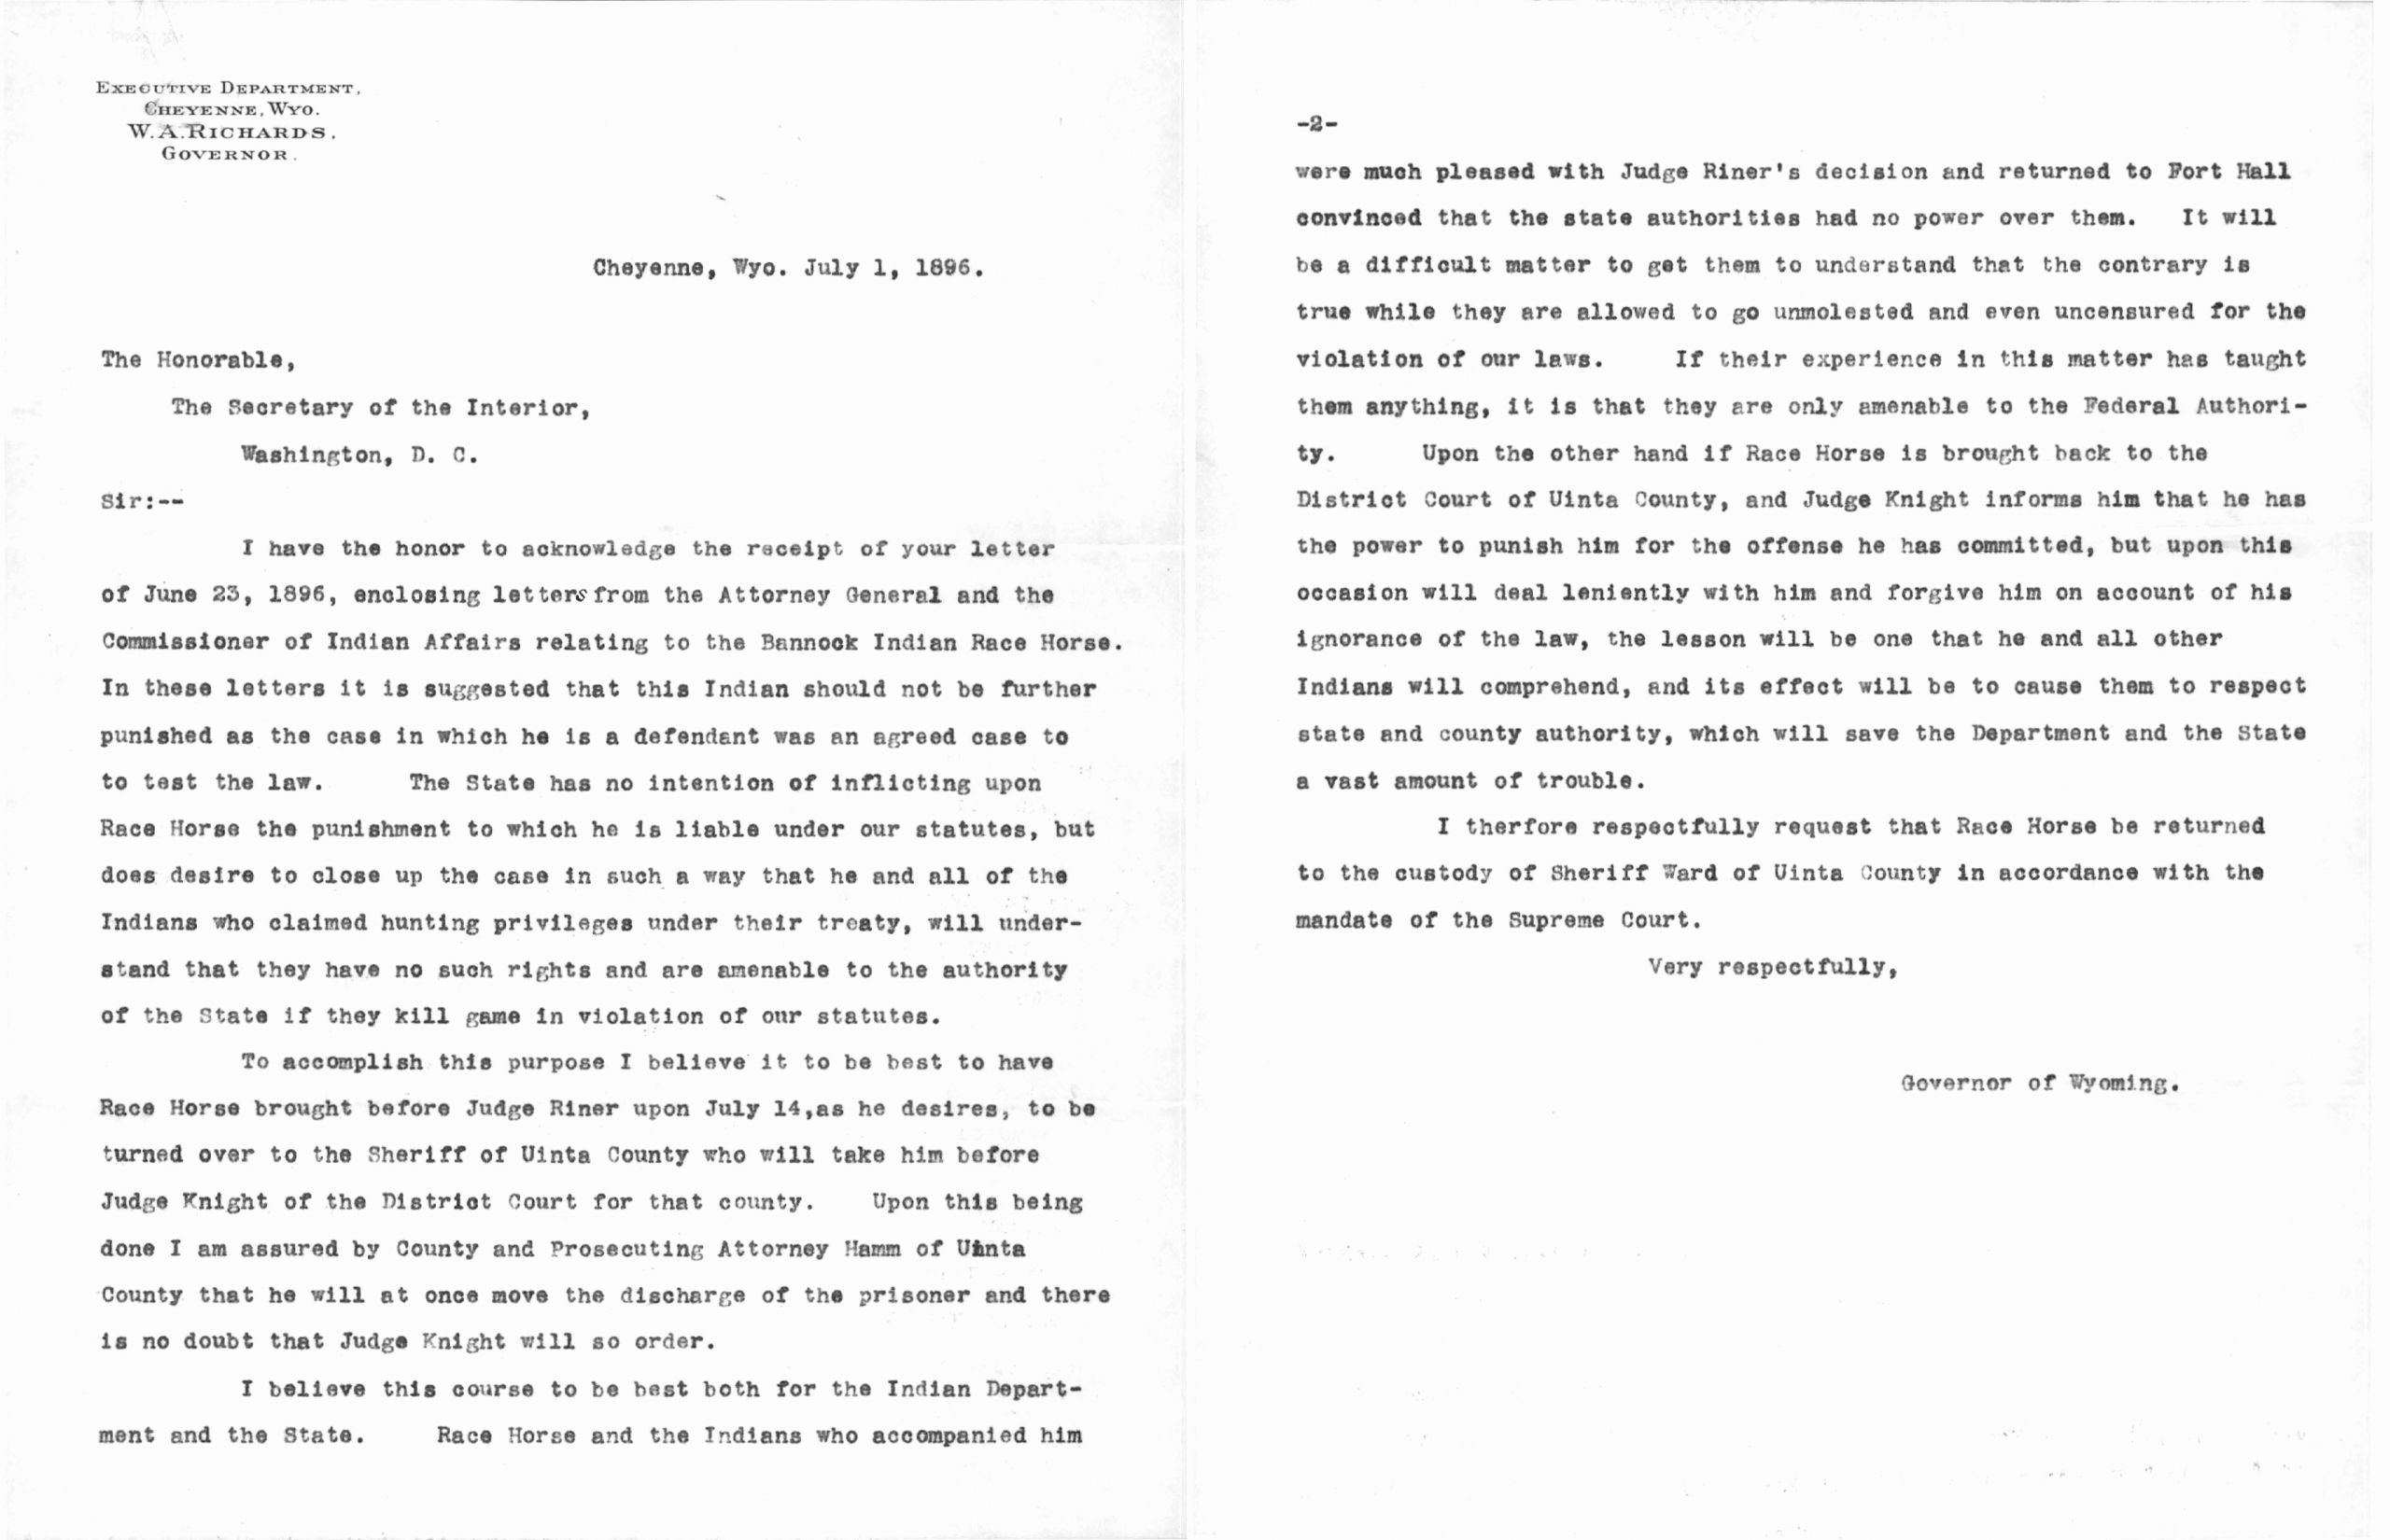 Sample Pardon Letter Unique A Surveyor In the Governor’s Fice William A Richards